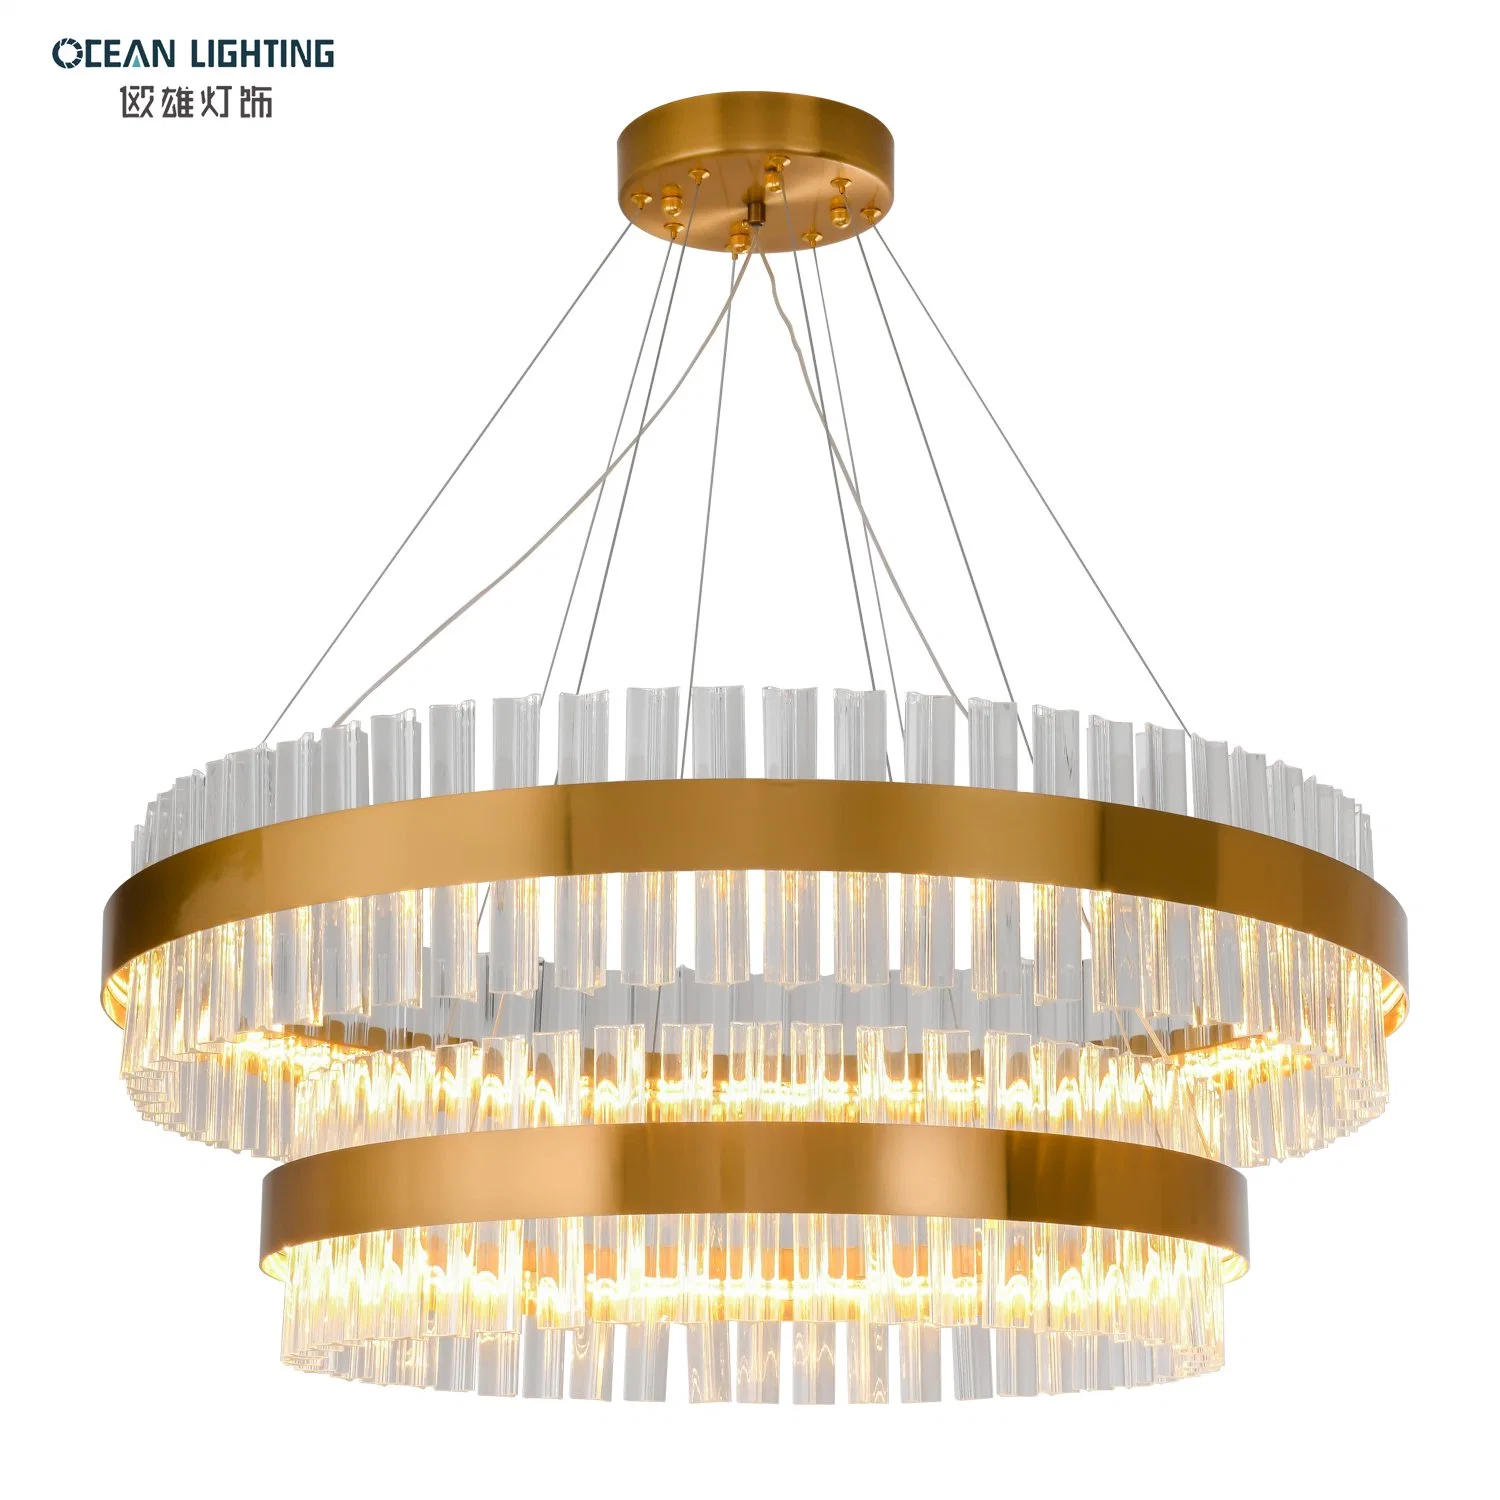 Ocean Lighting Luxury Indoor Pendant LED Light K9 Crystal Pendant Light